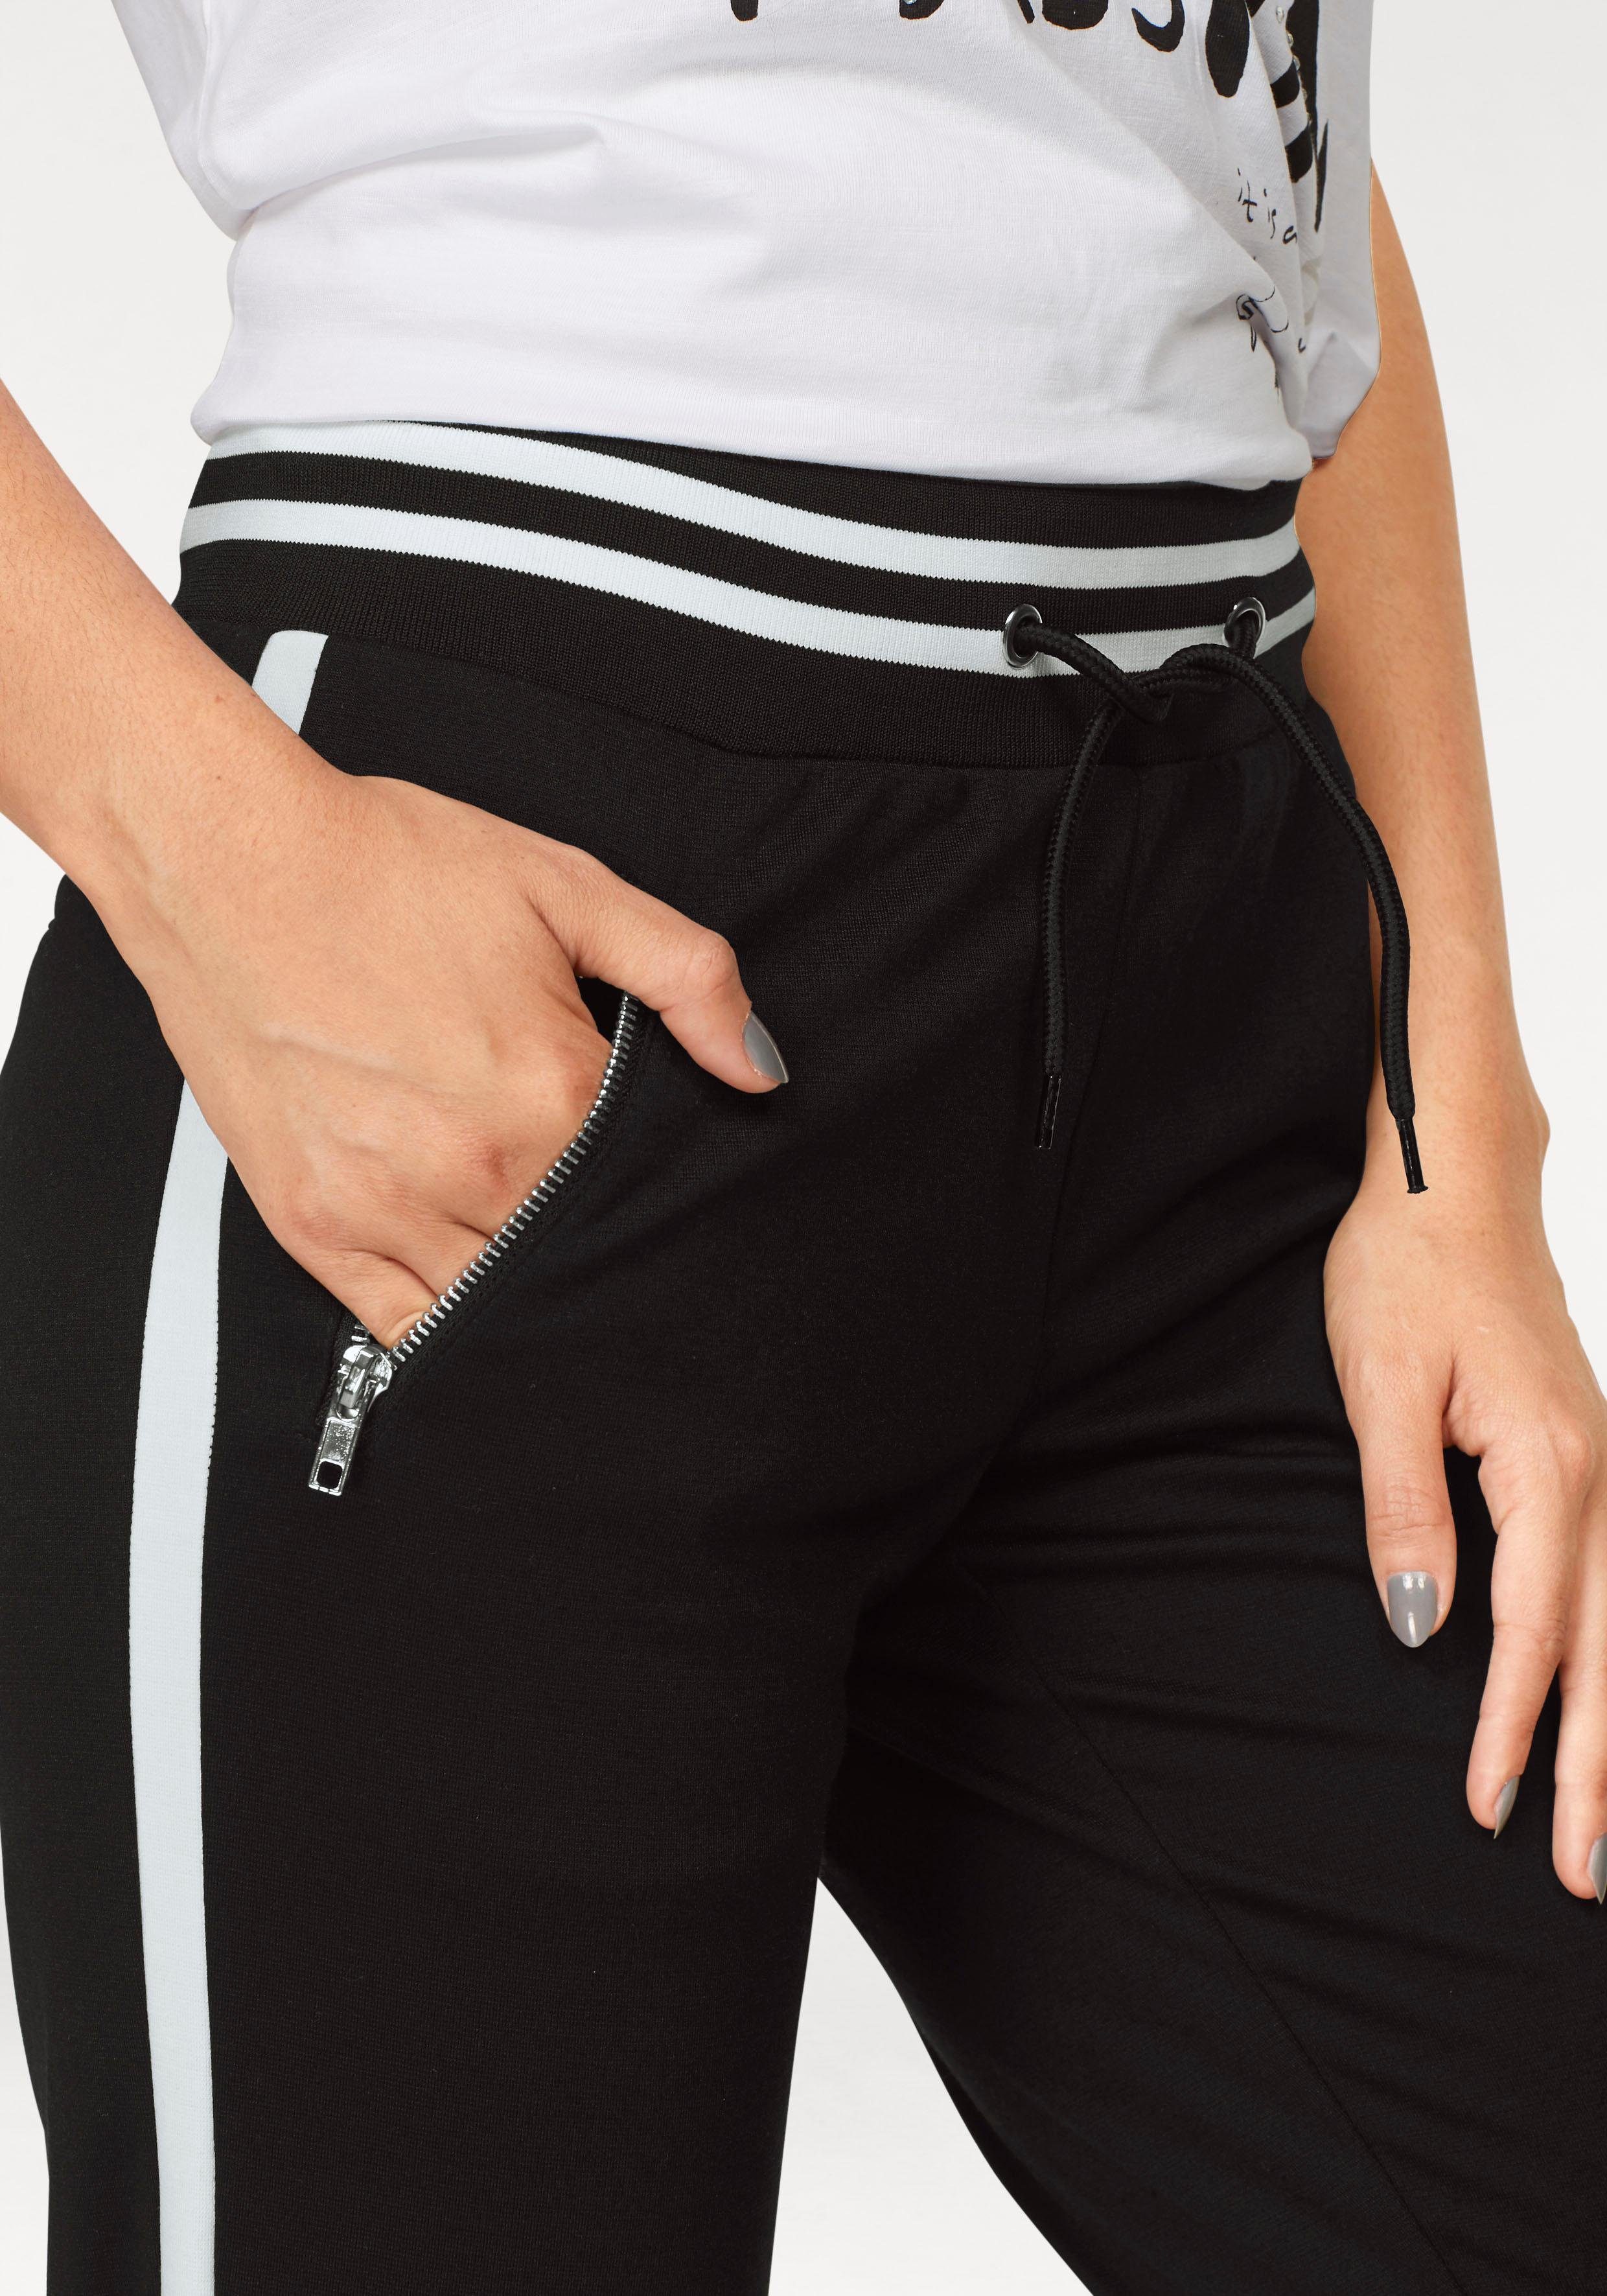 Pants Retro-Design Jogger Material) (Hose nachhaltigem schwarz aus trendigem im AJC